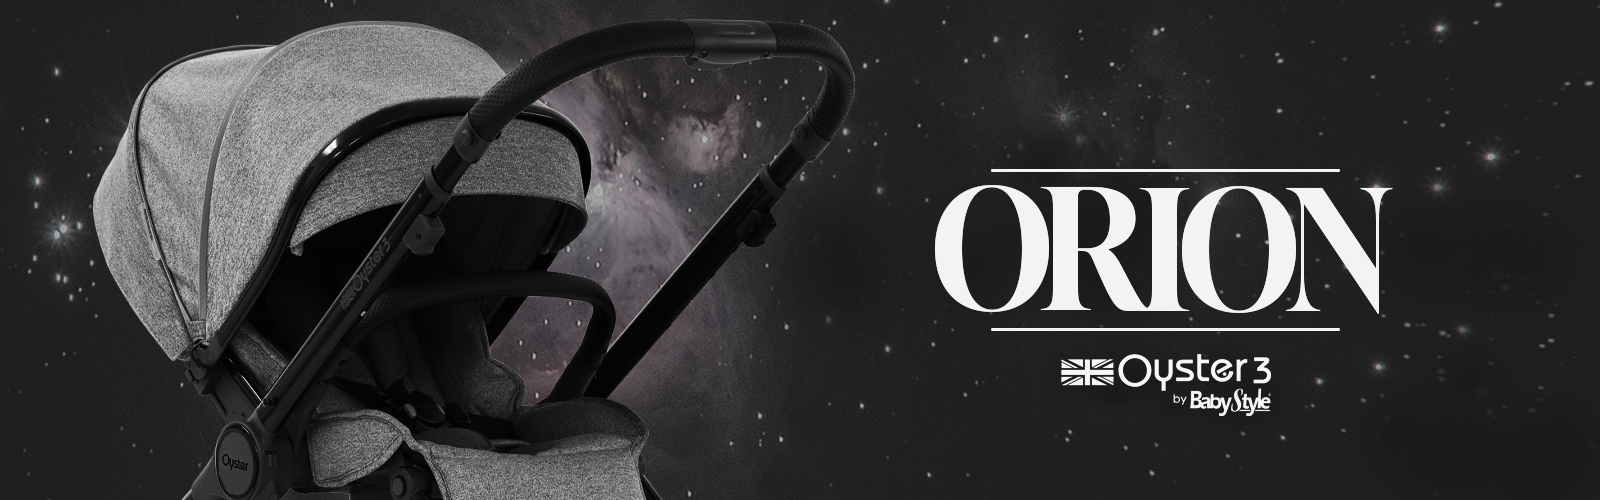 Wózek spacerowy Oyster3 Orion